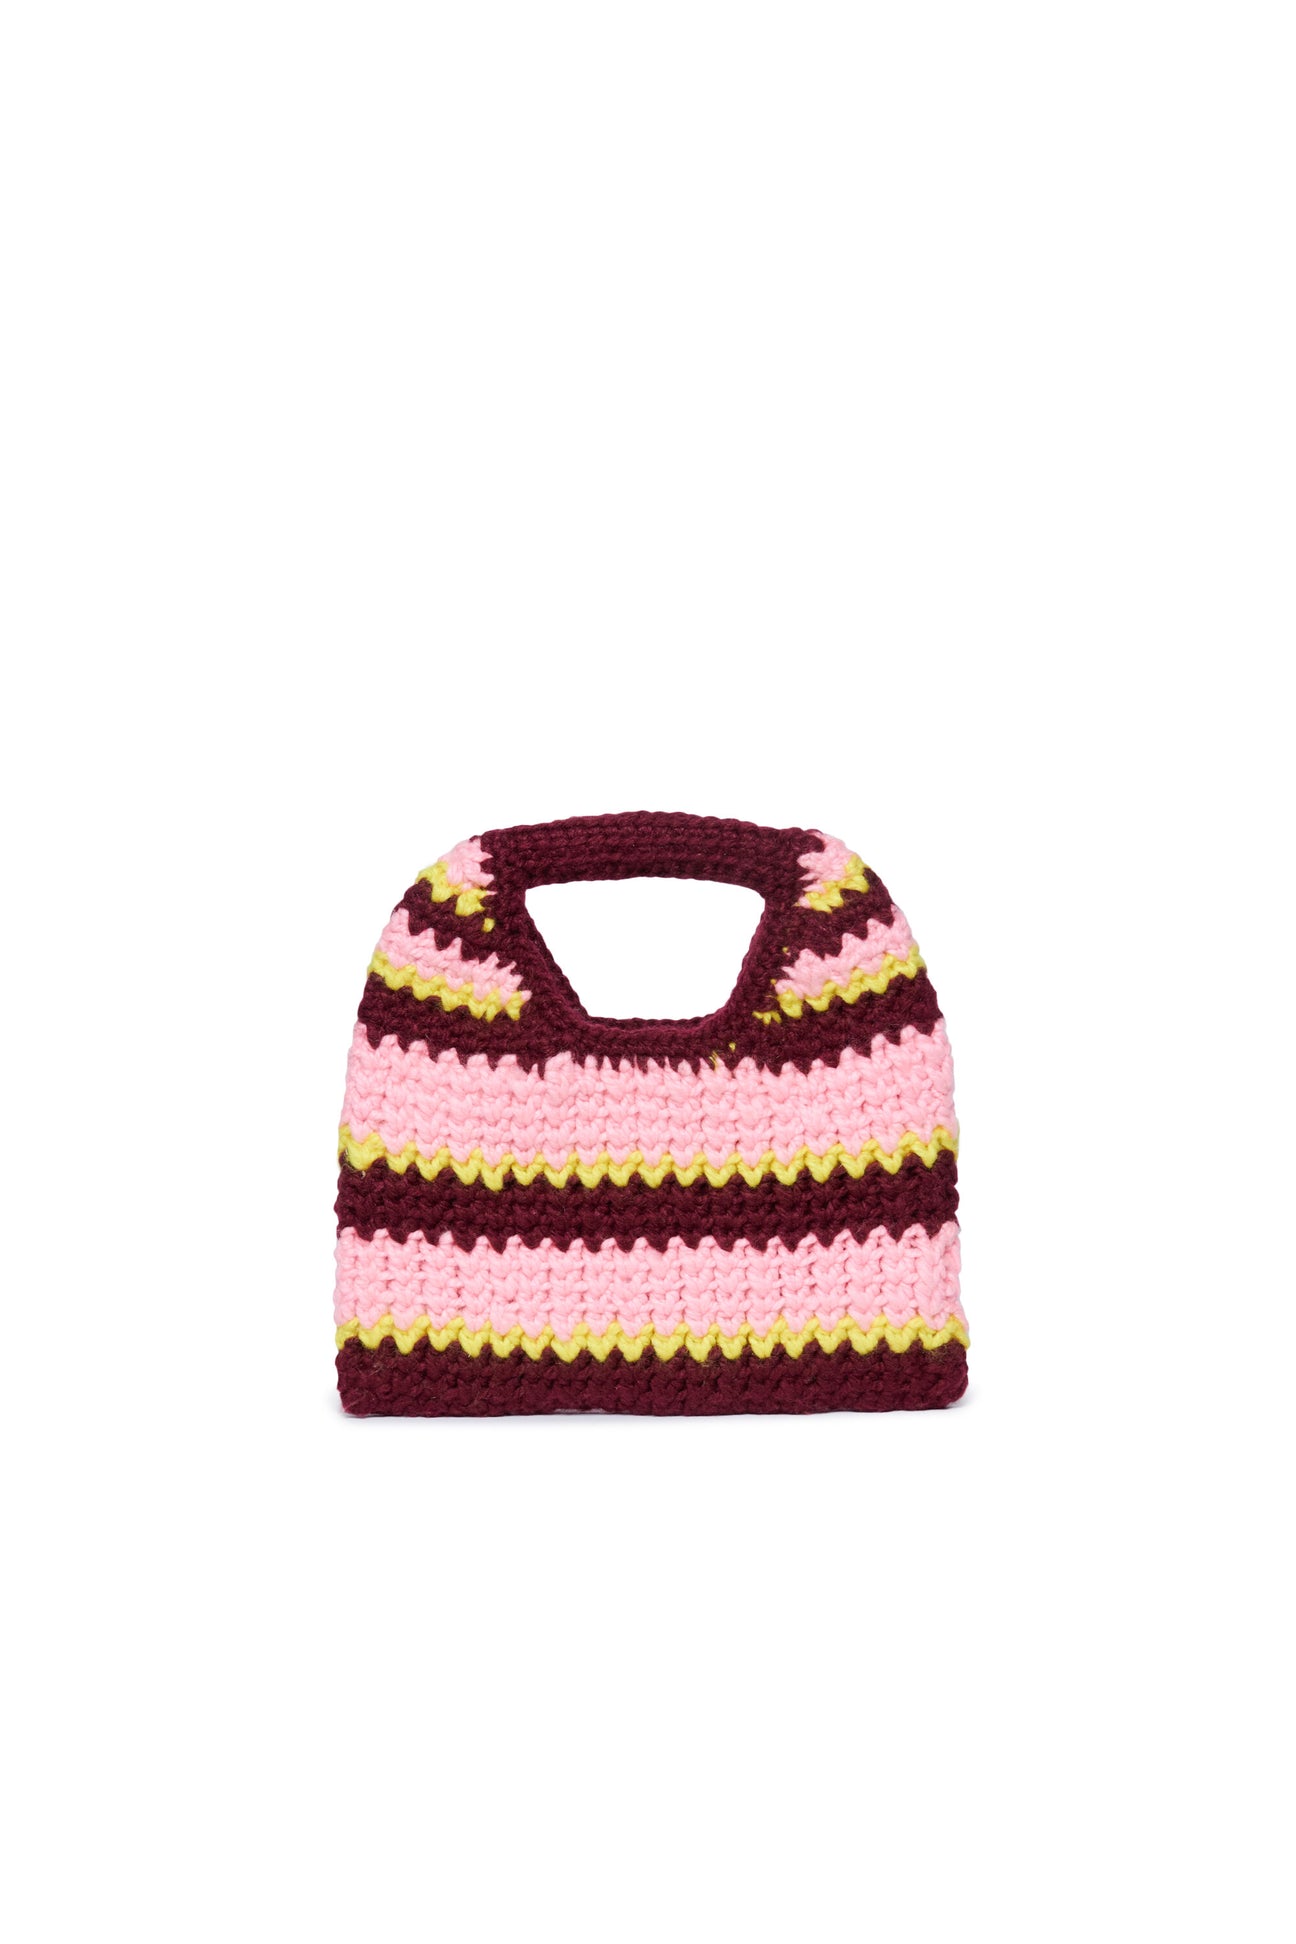 Wooly crochet bag Wooly crochet bag